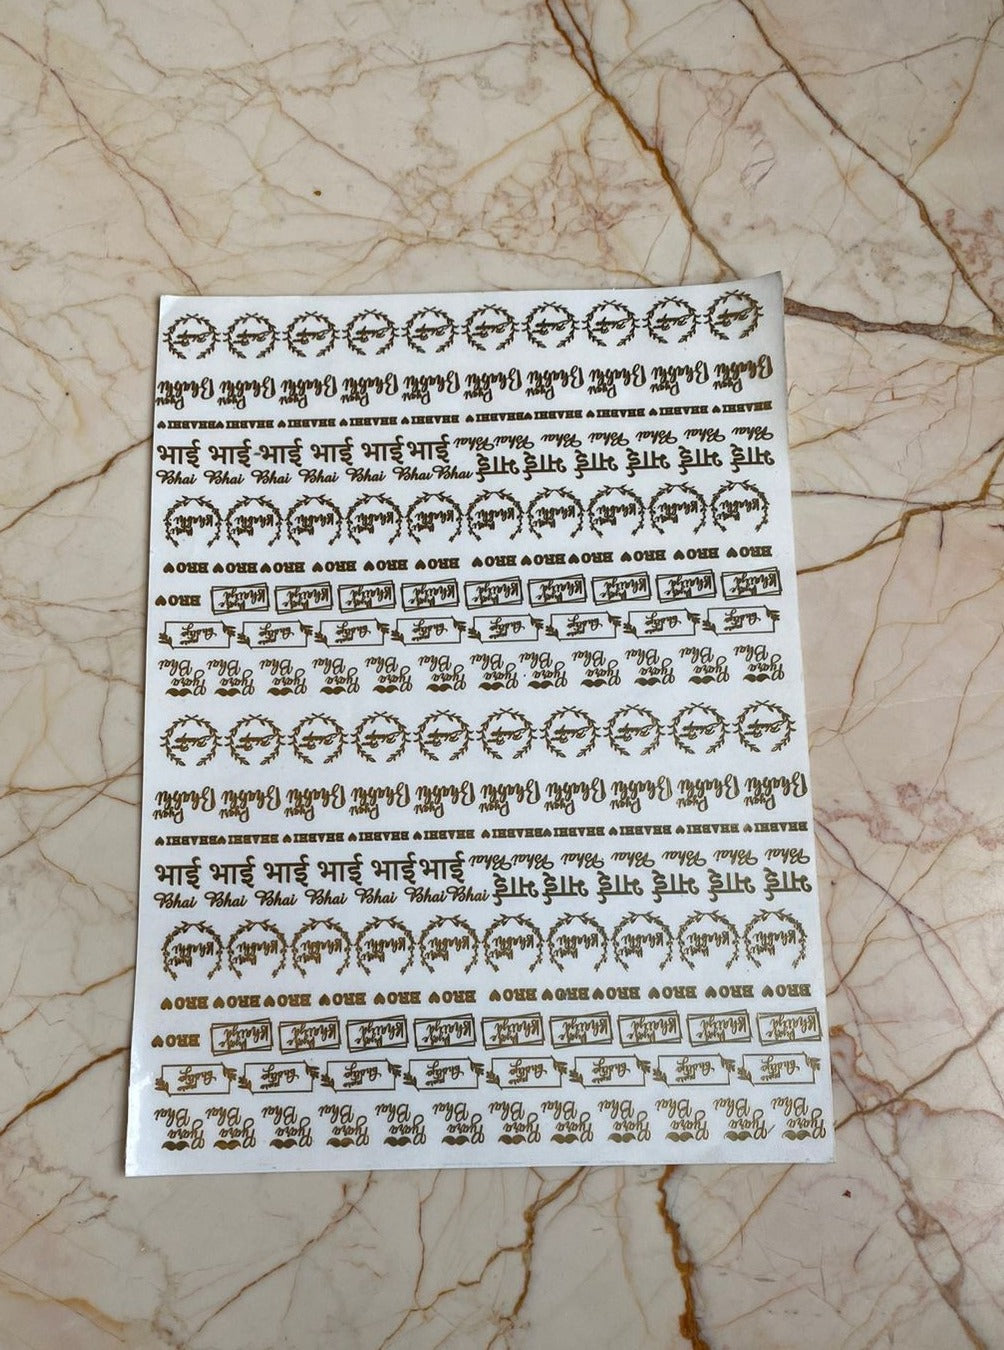 Rakhi Metal Sticker, Size: 2 x 1 Inch